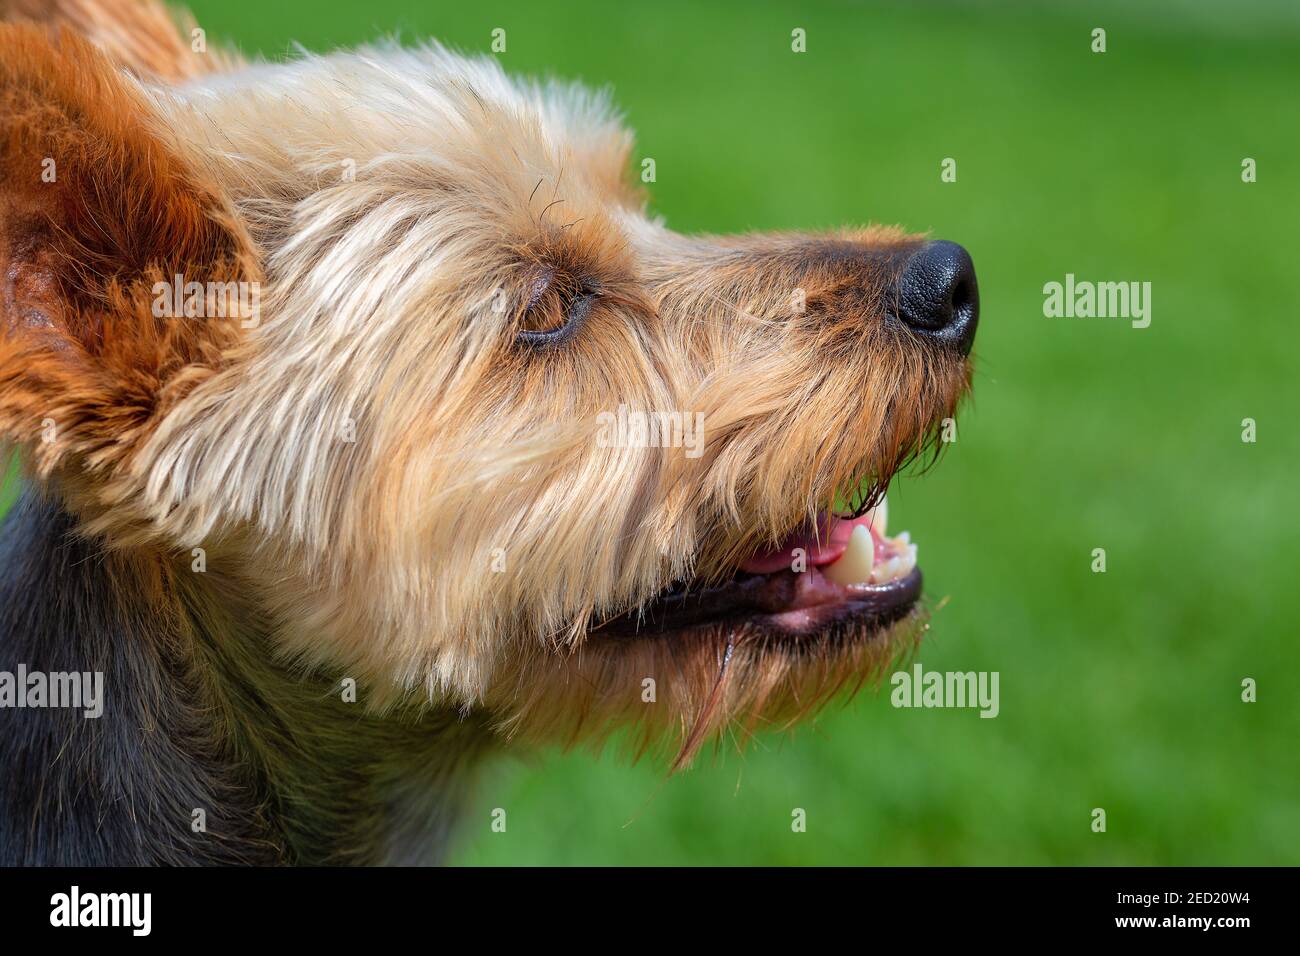 Close-up shot of an adorable Australian Silky Terrier dog head. Stock Photo